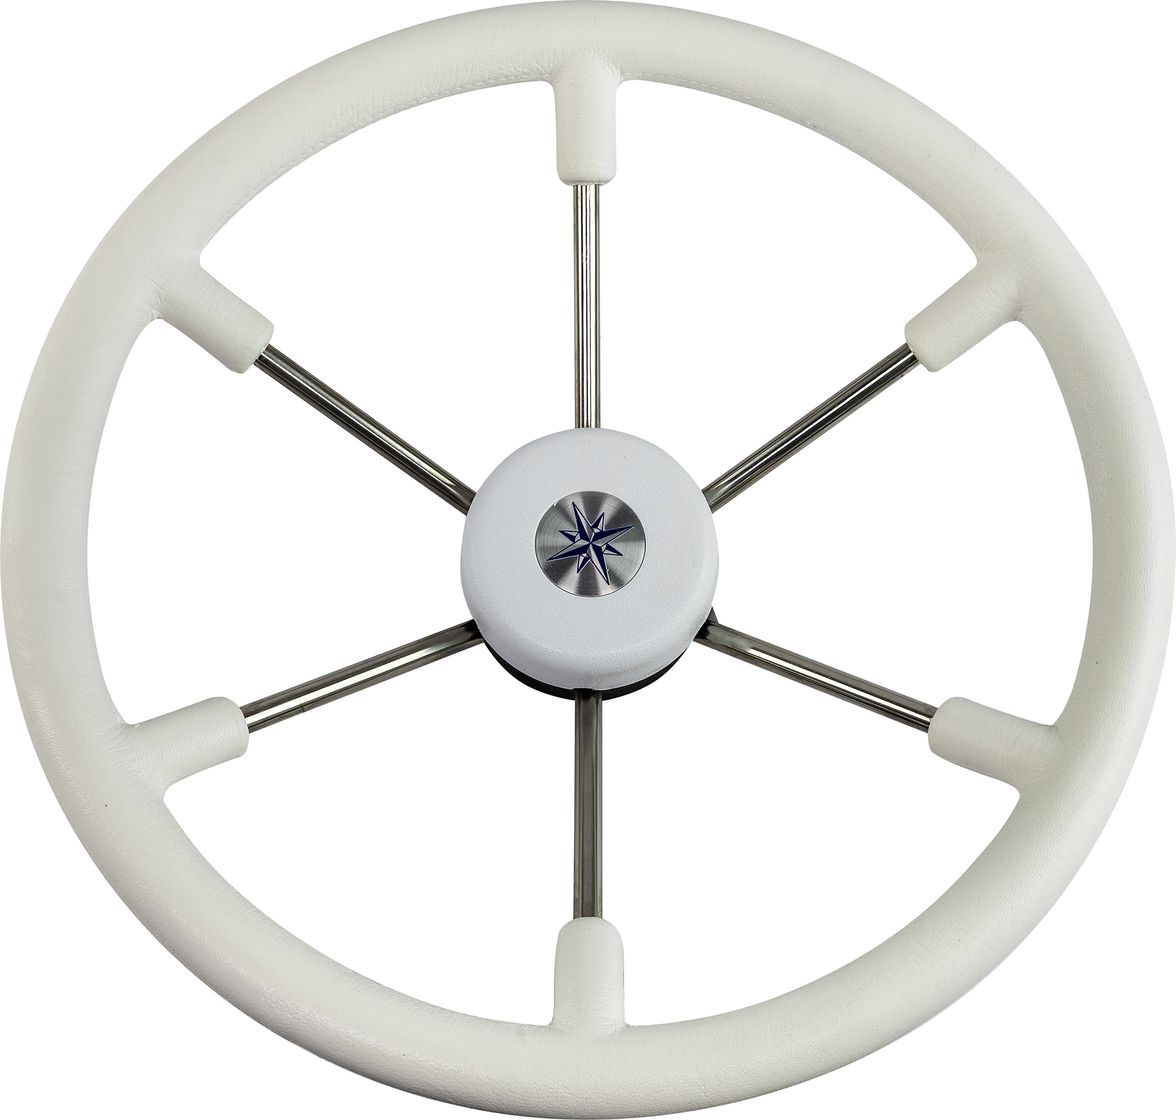 Рулевое колесо LEADER TANEGUM белый обод серебряные спицы д. 400 мм VN7400-08 рулевое колесо leader plast обод серебряные спицы д 360 мм vn8360 01